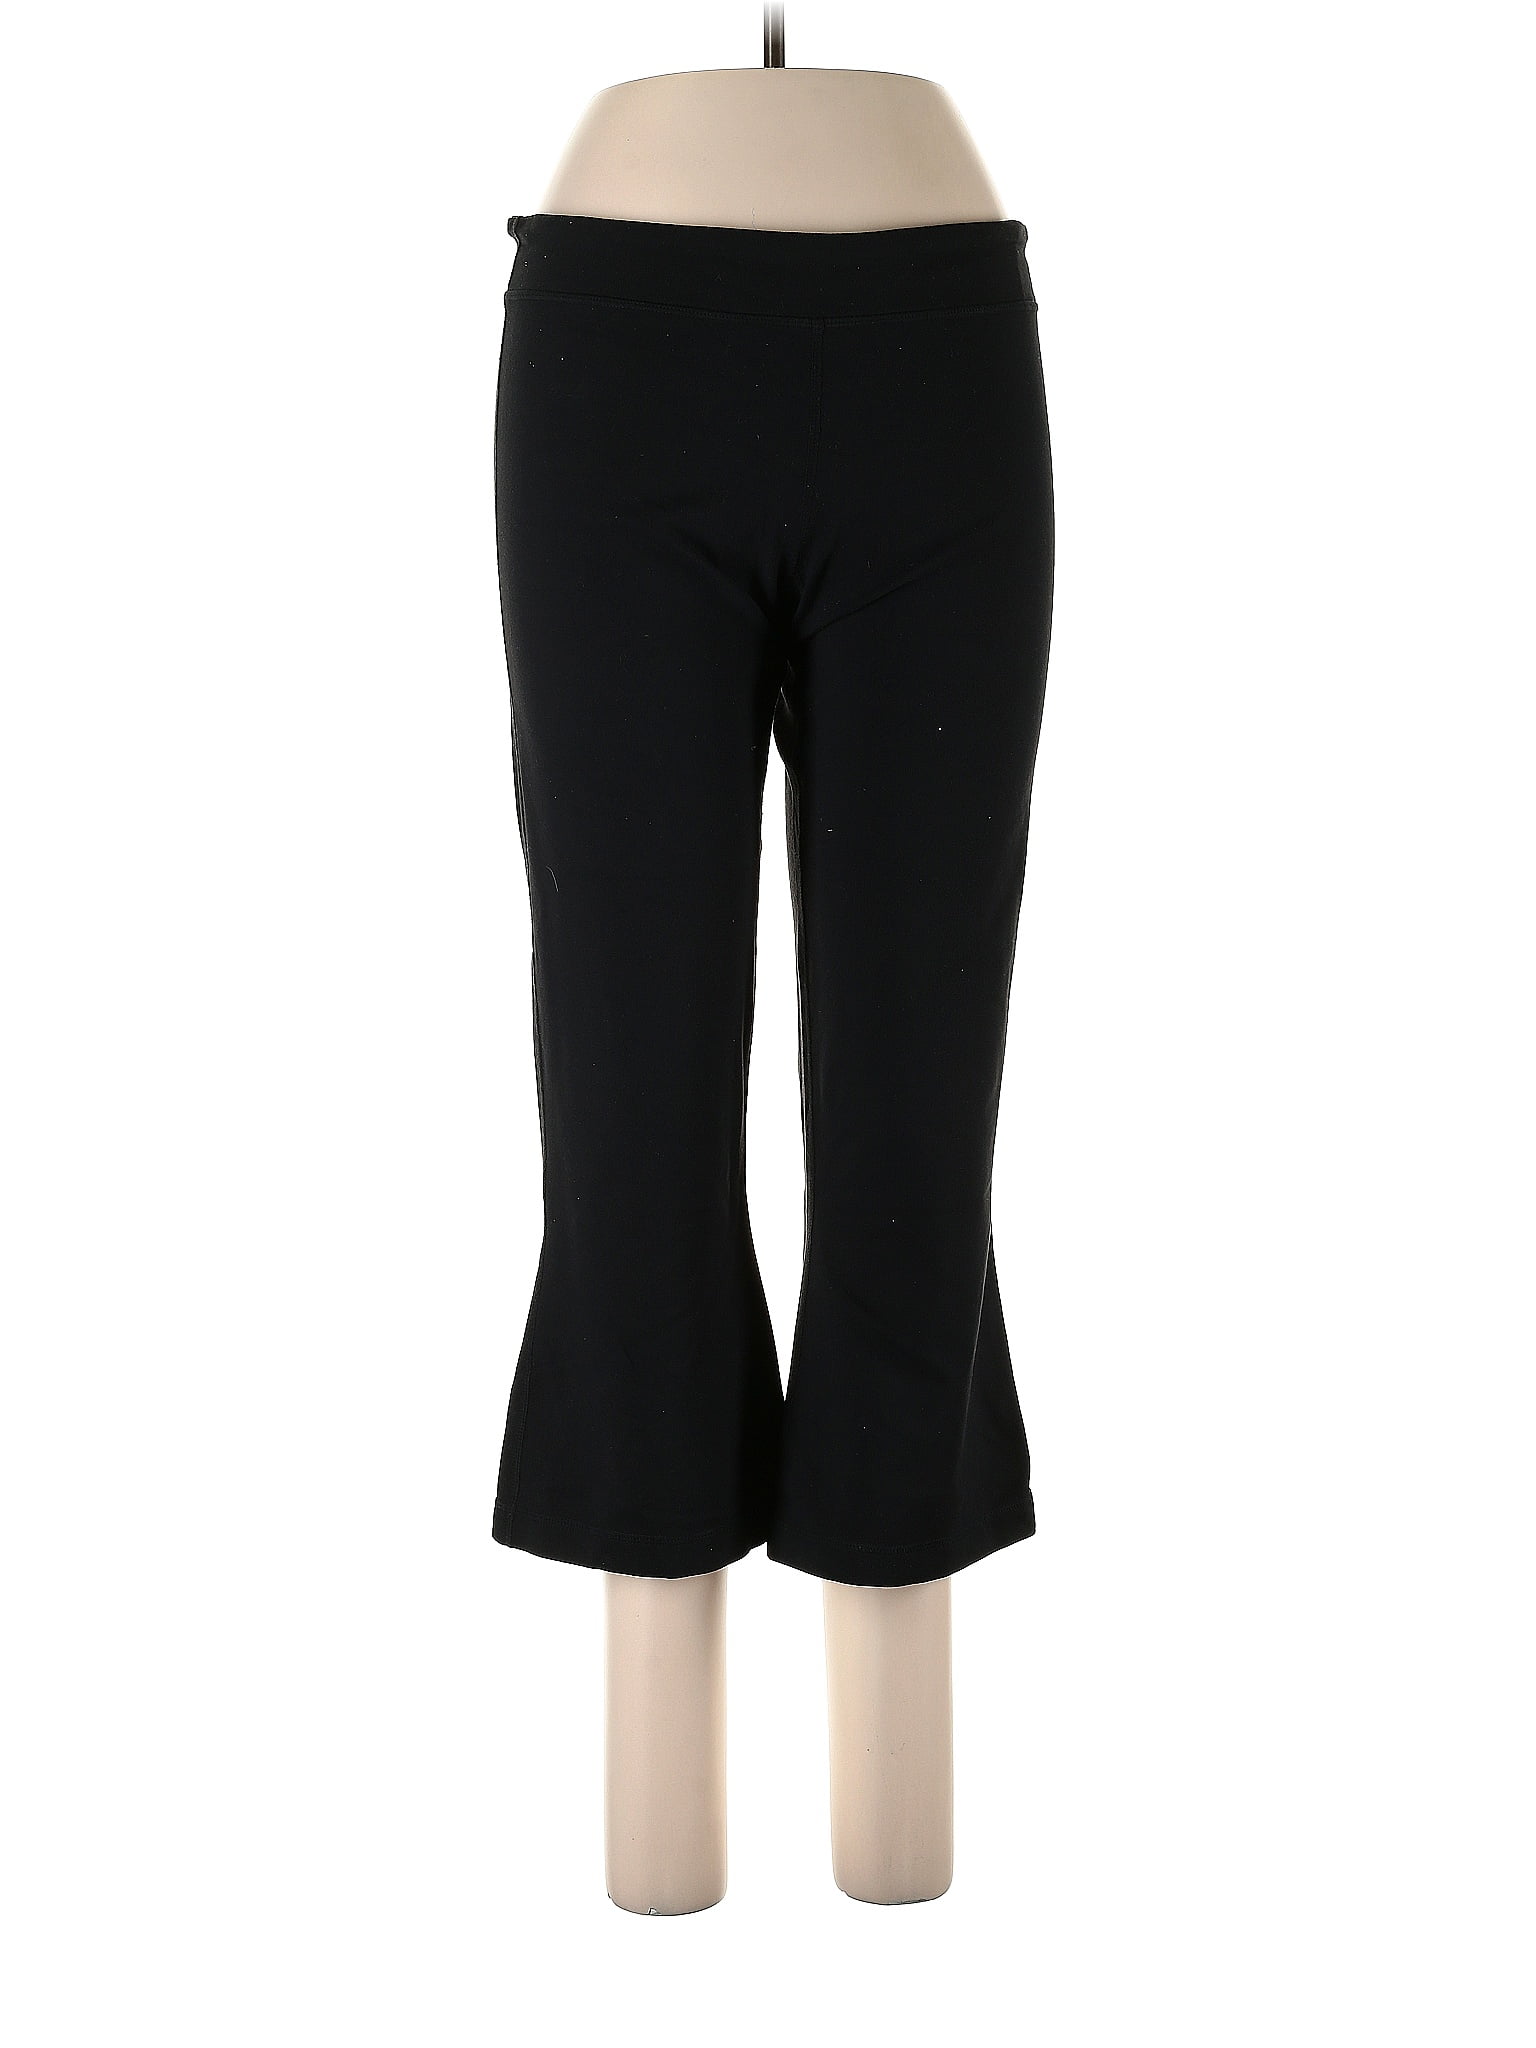 GAIAM Solid Black Yoga Pants Size XL - 52% off